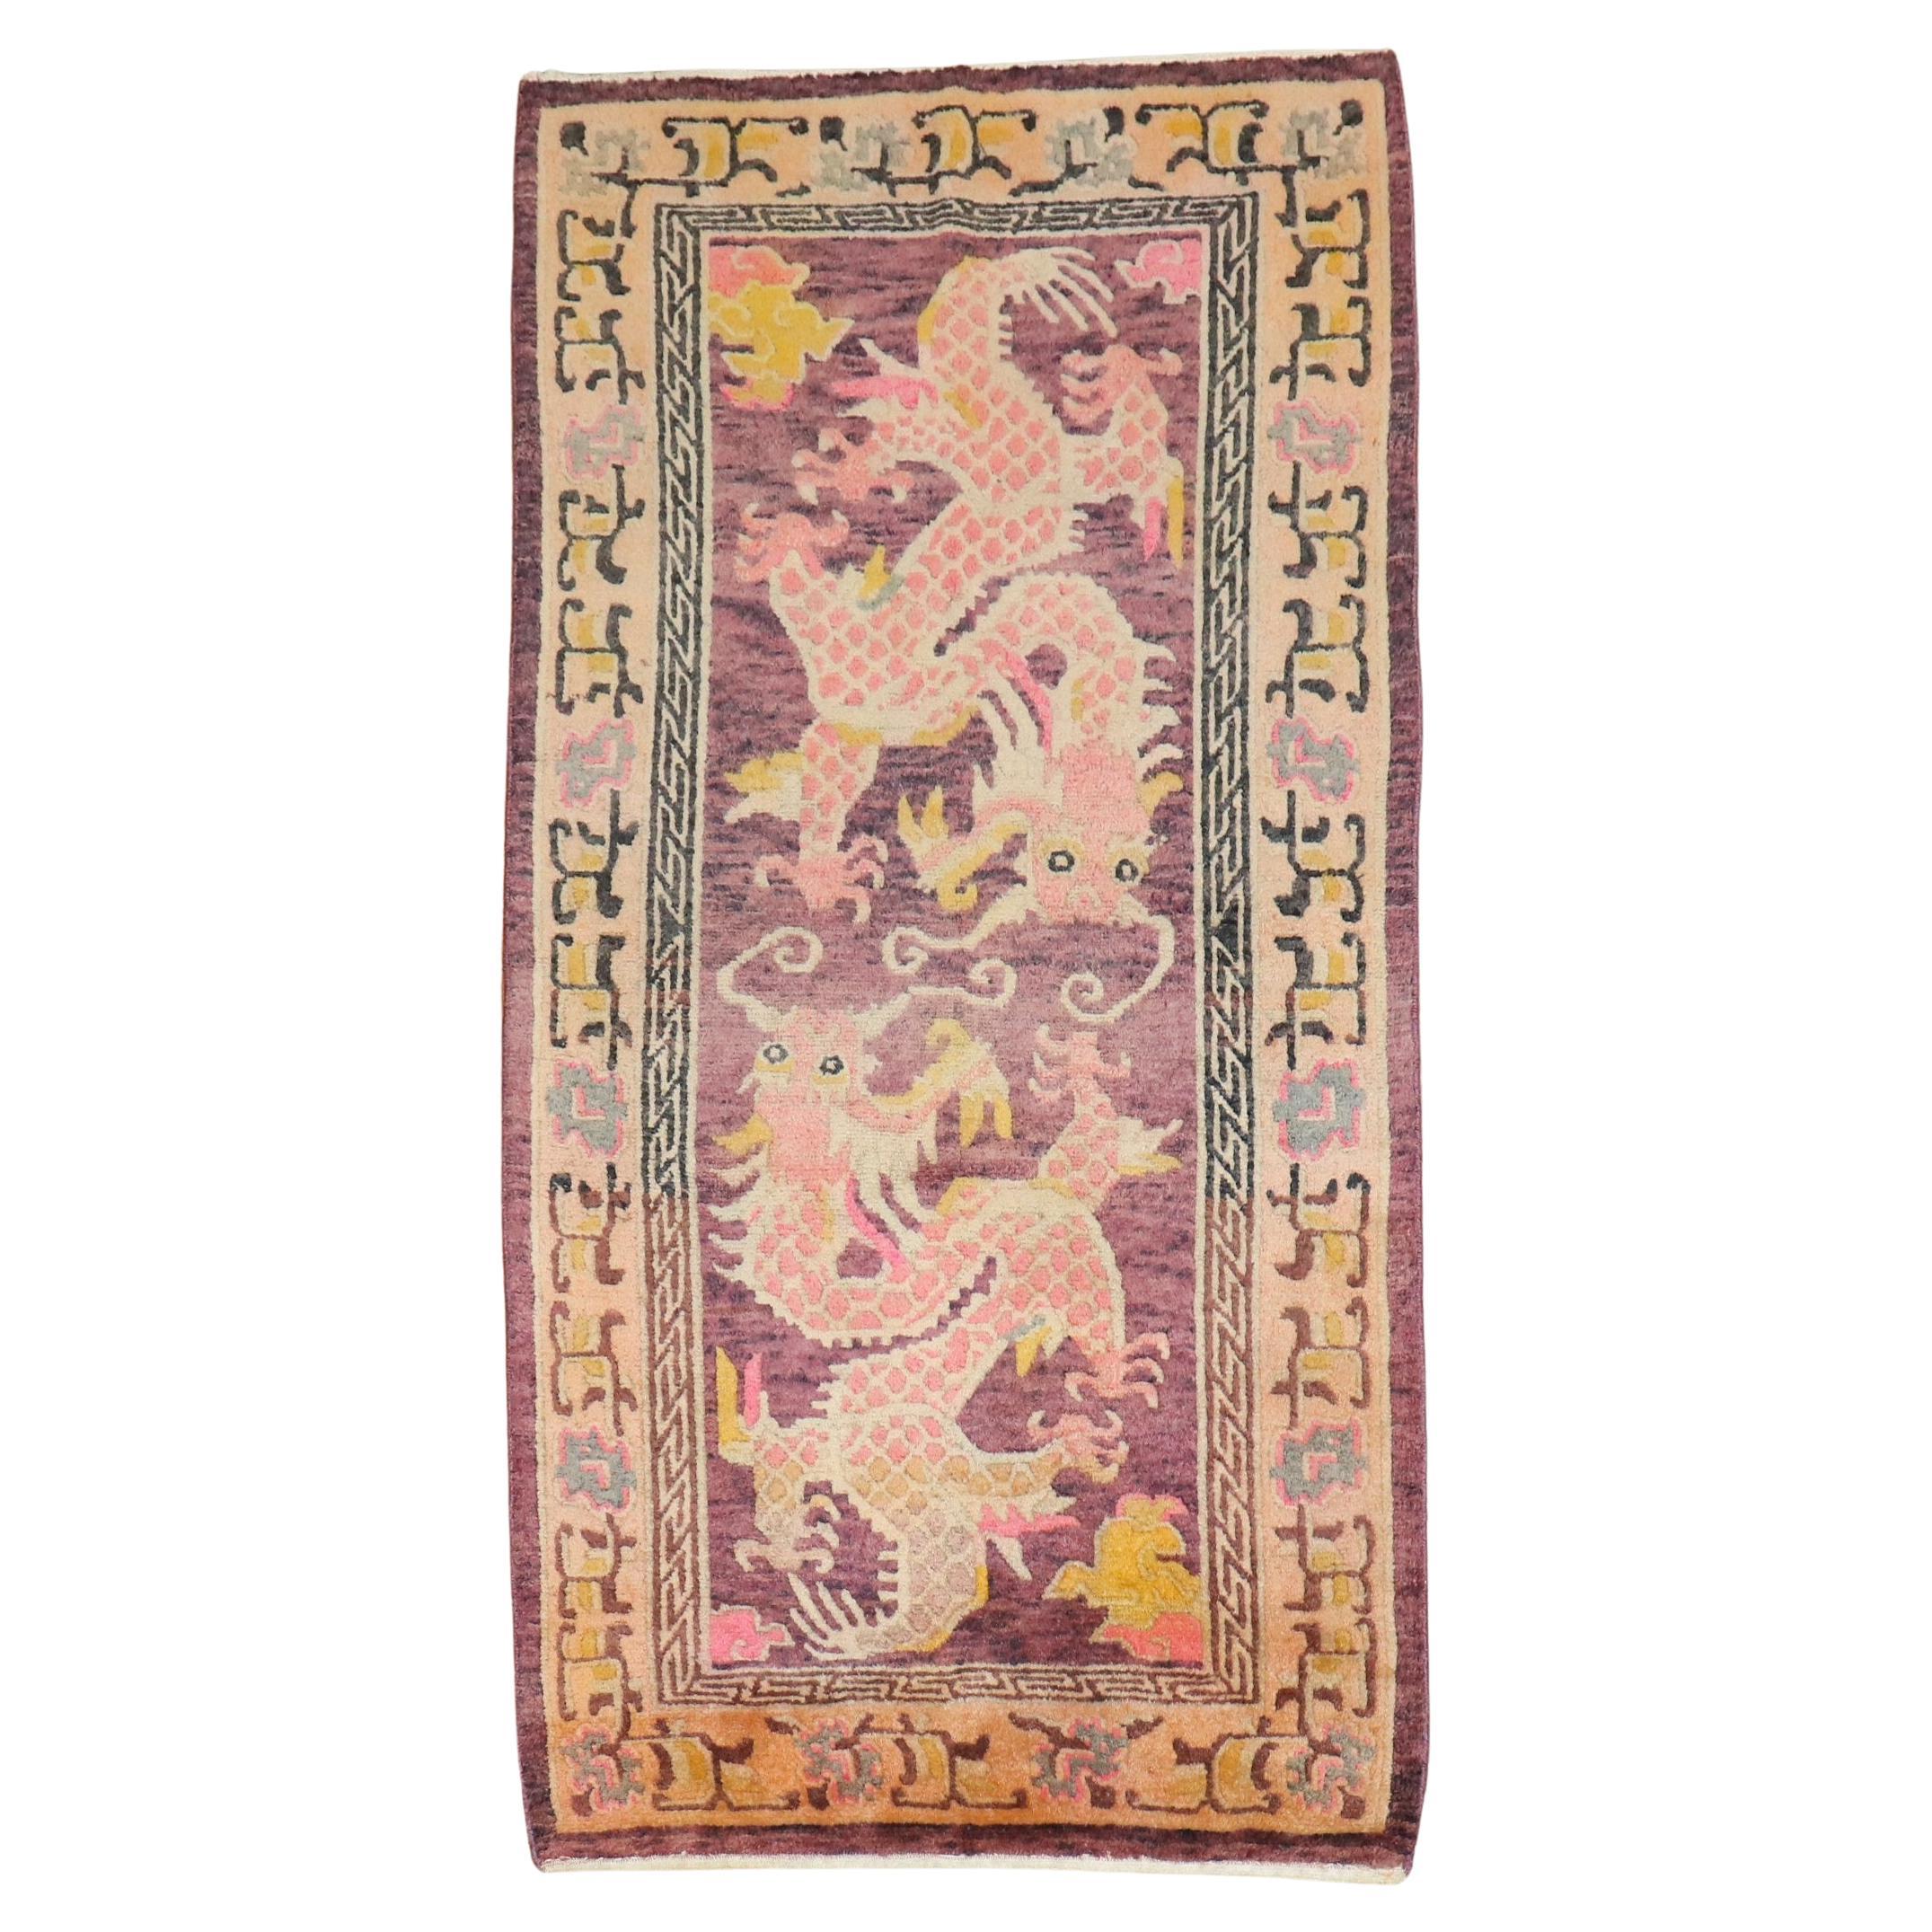 Zabihi Kollektion Lavendel Drache Vintage Tibetischer Teppich